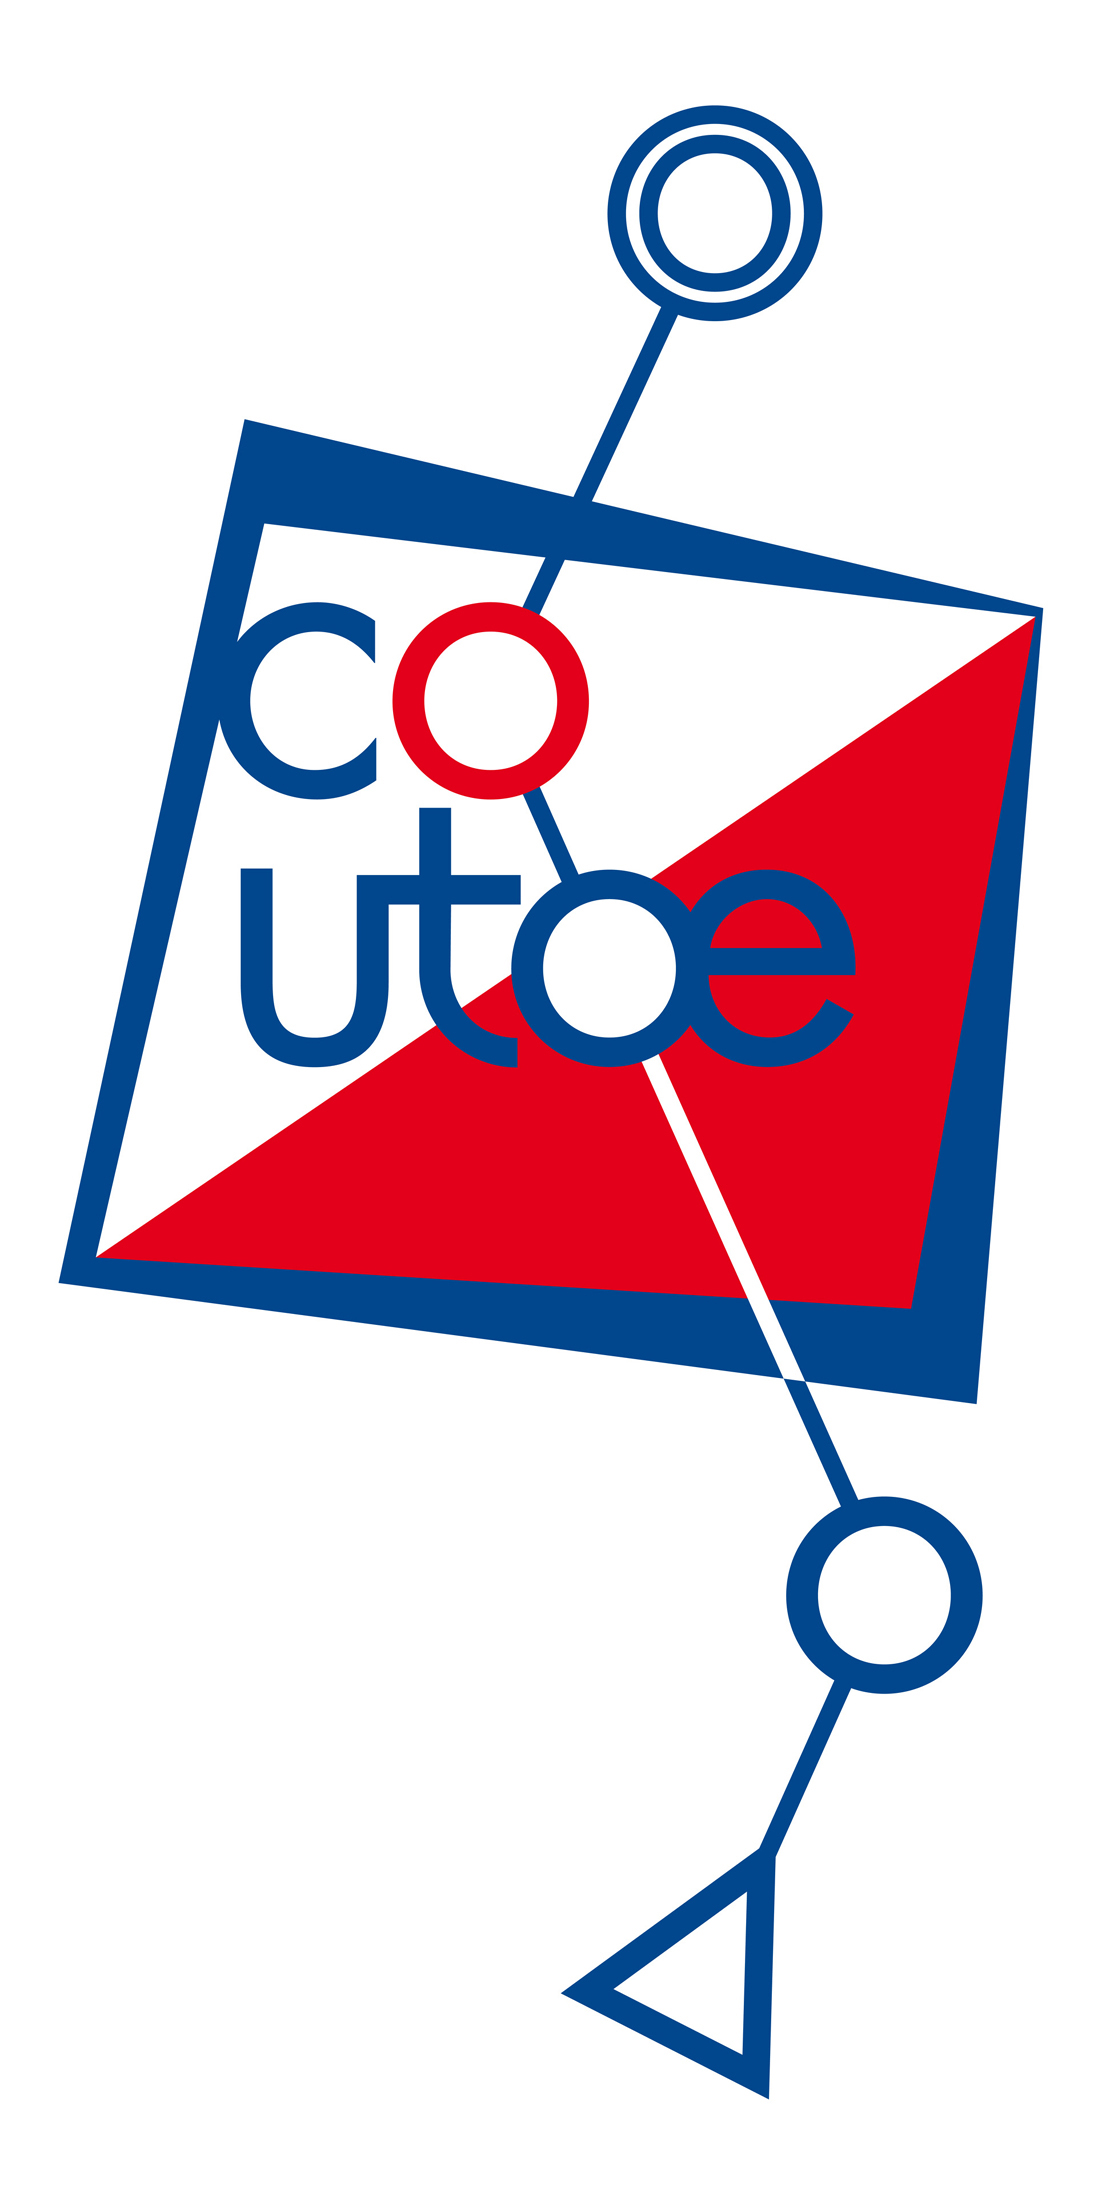 co-utoe-bellinzona-logo.jpg